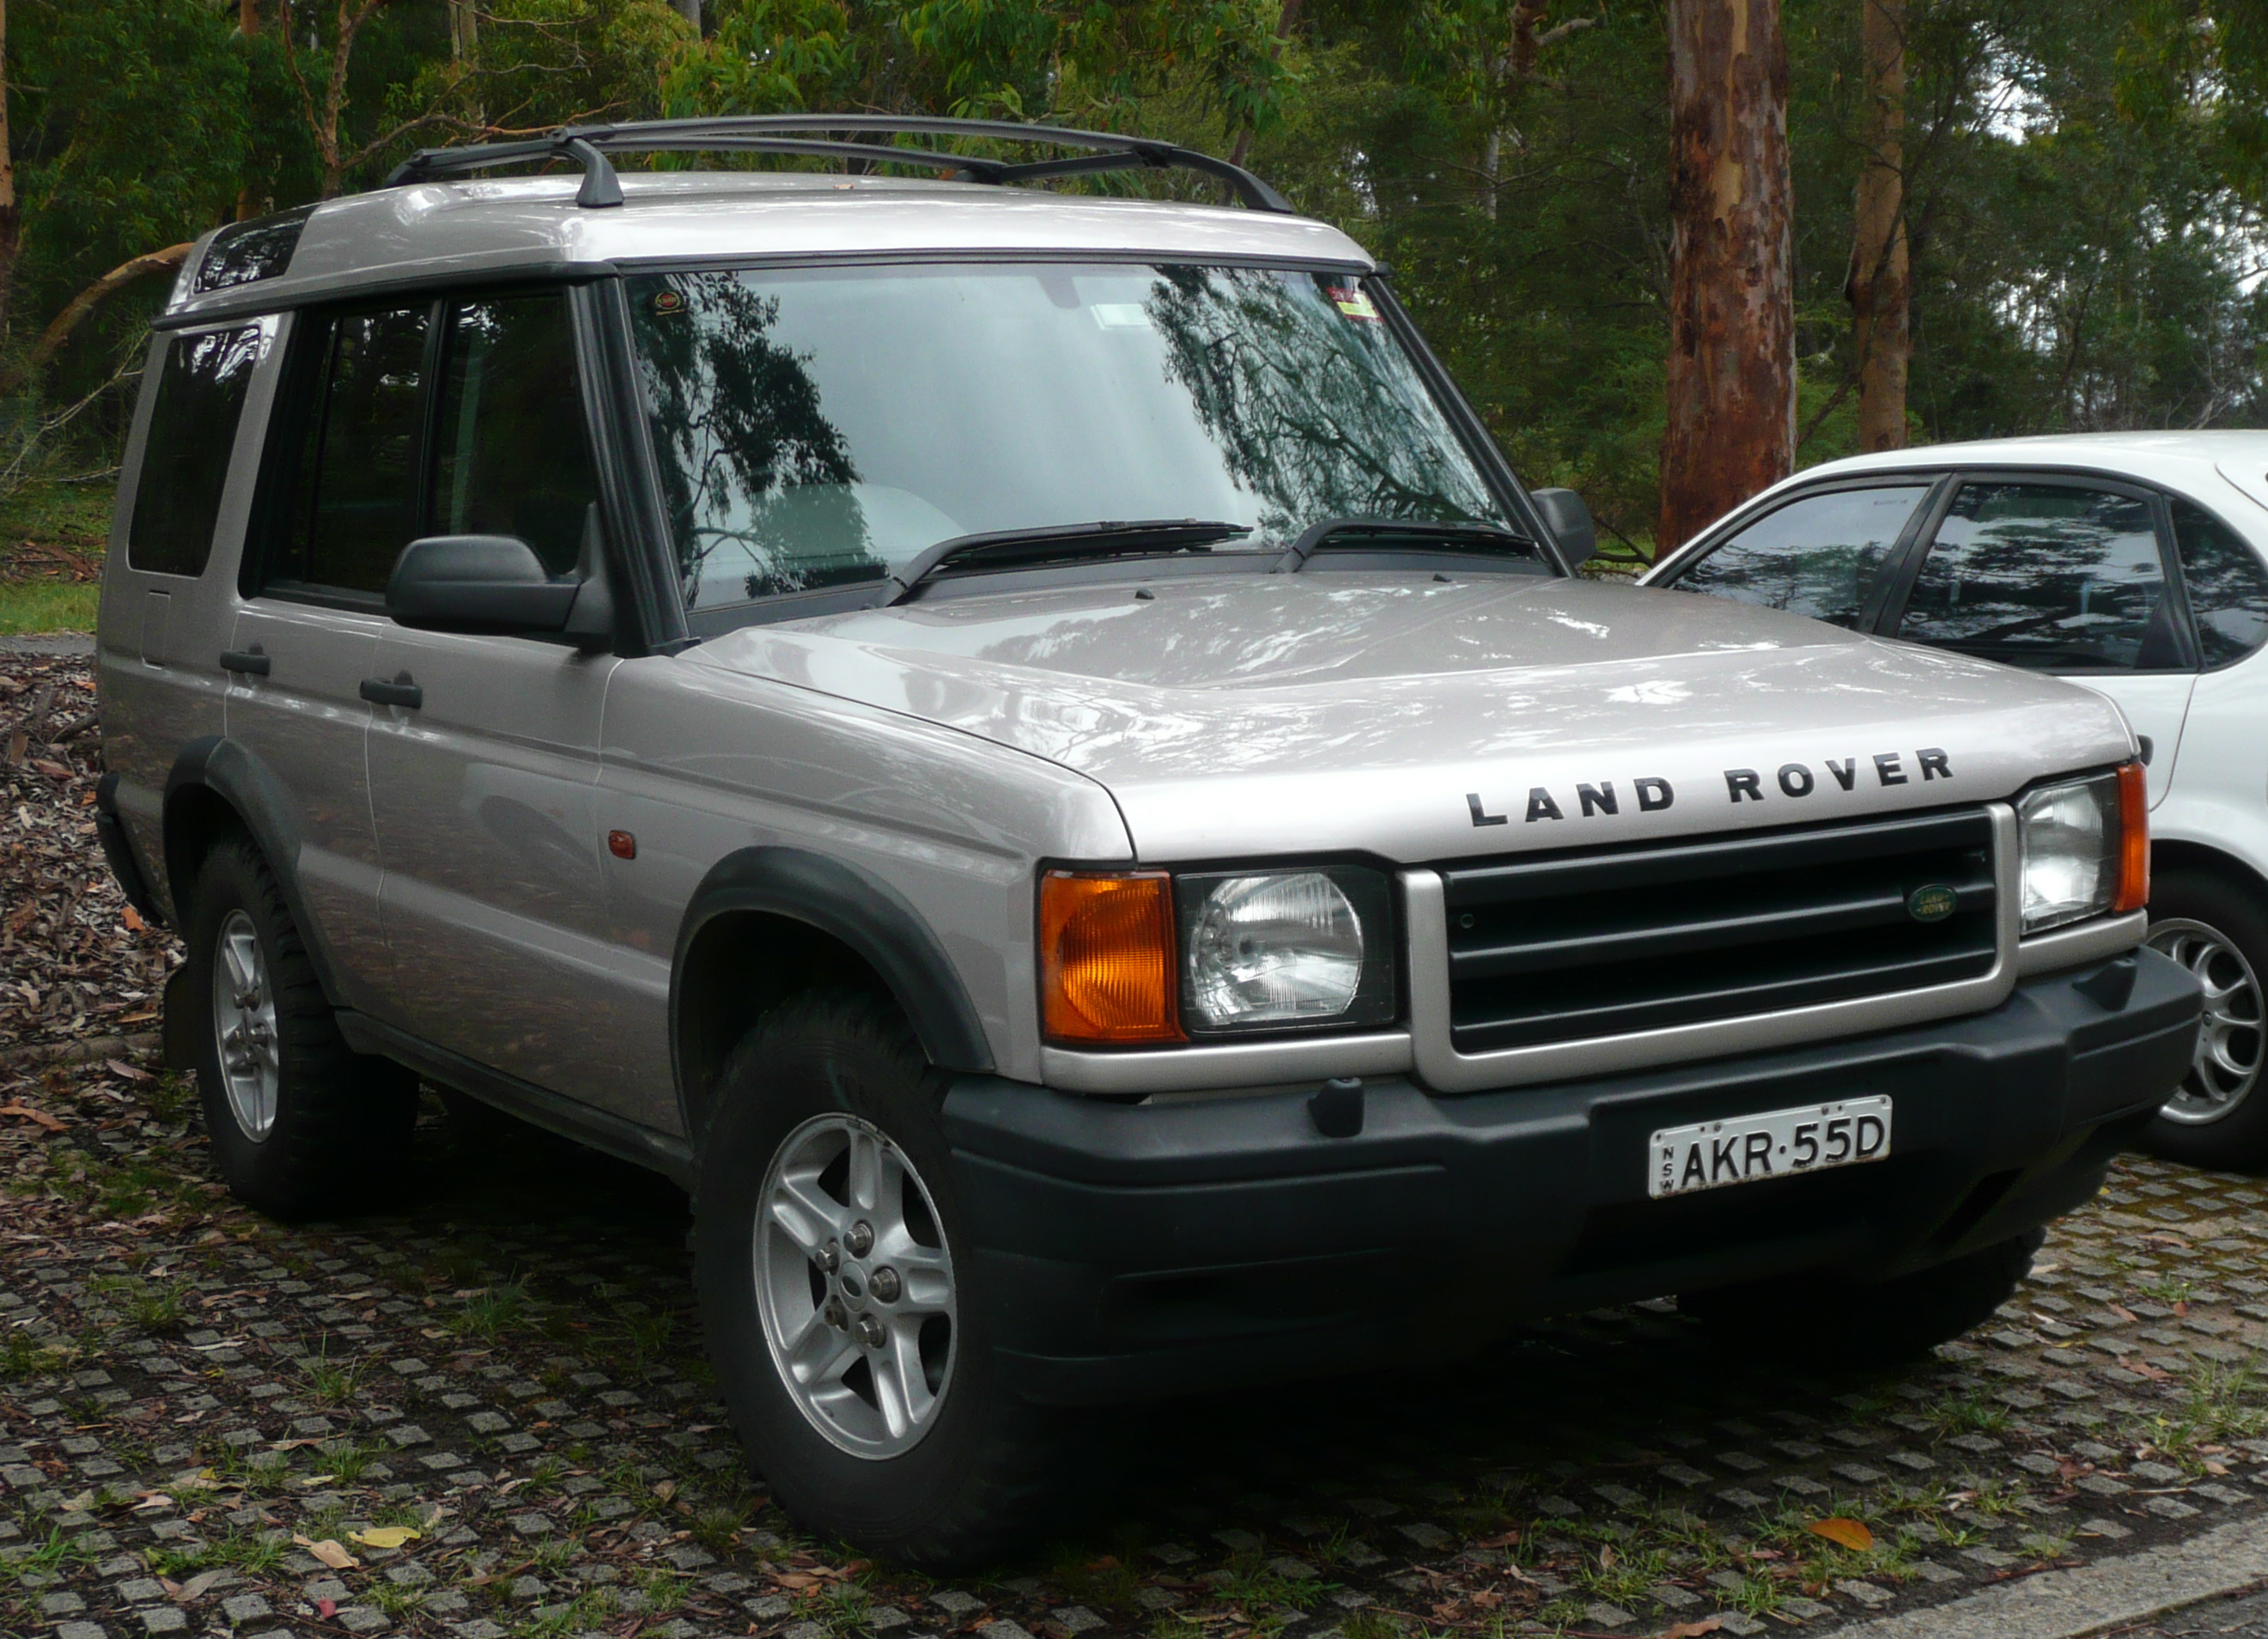 Land Rover Discovery II Photos, Reviews, News, Specs, Buy car